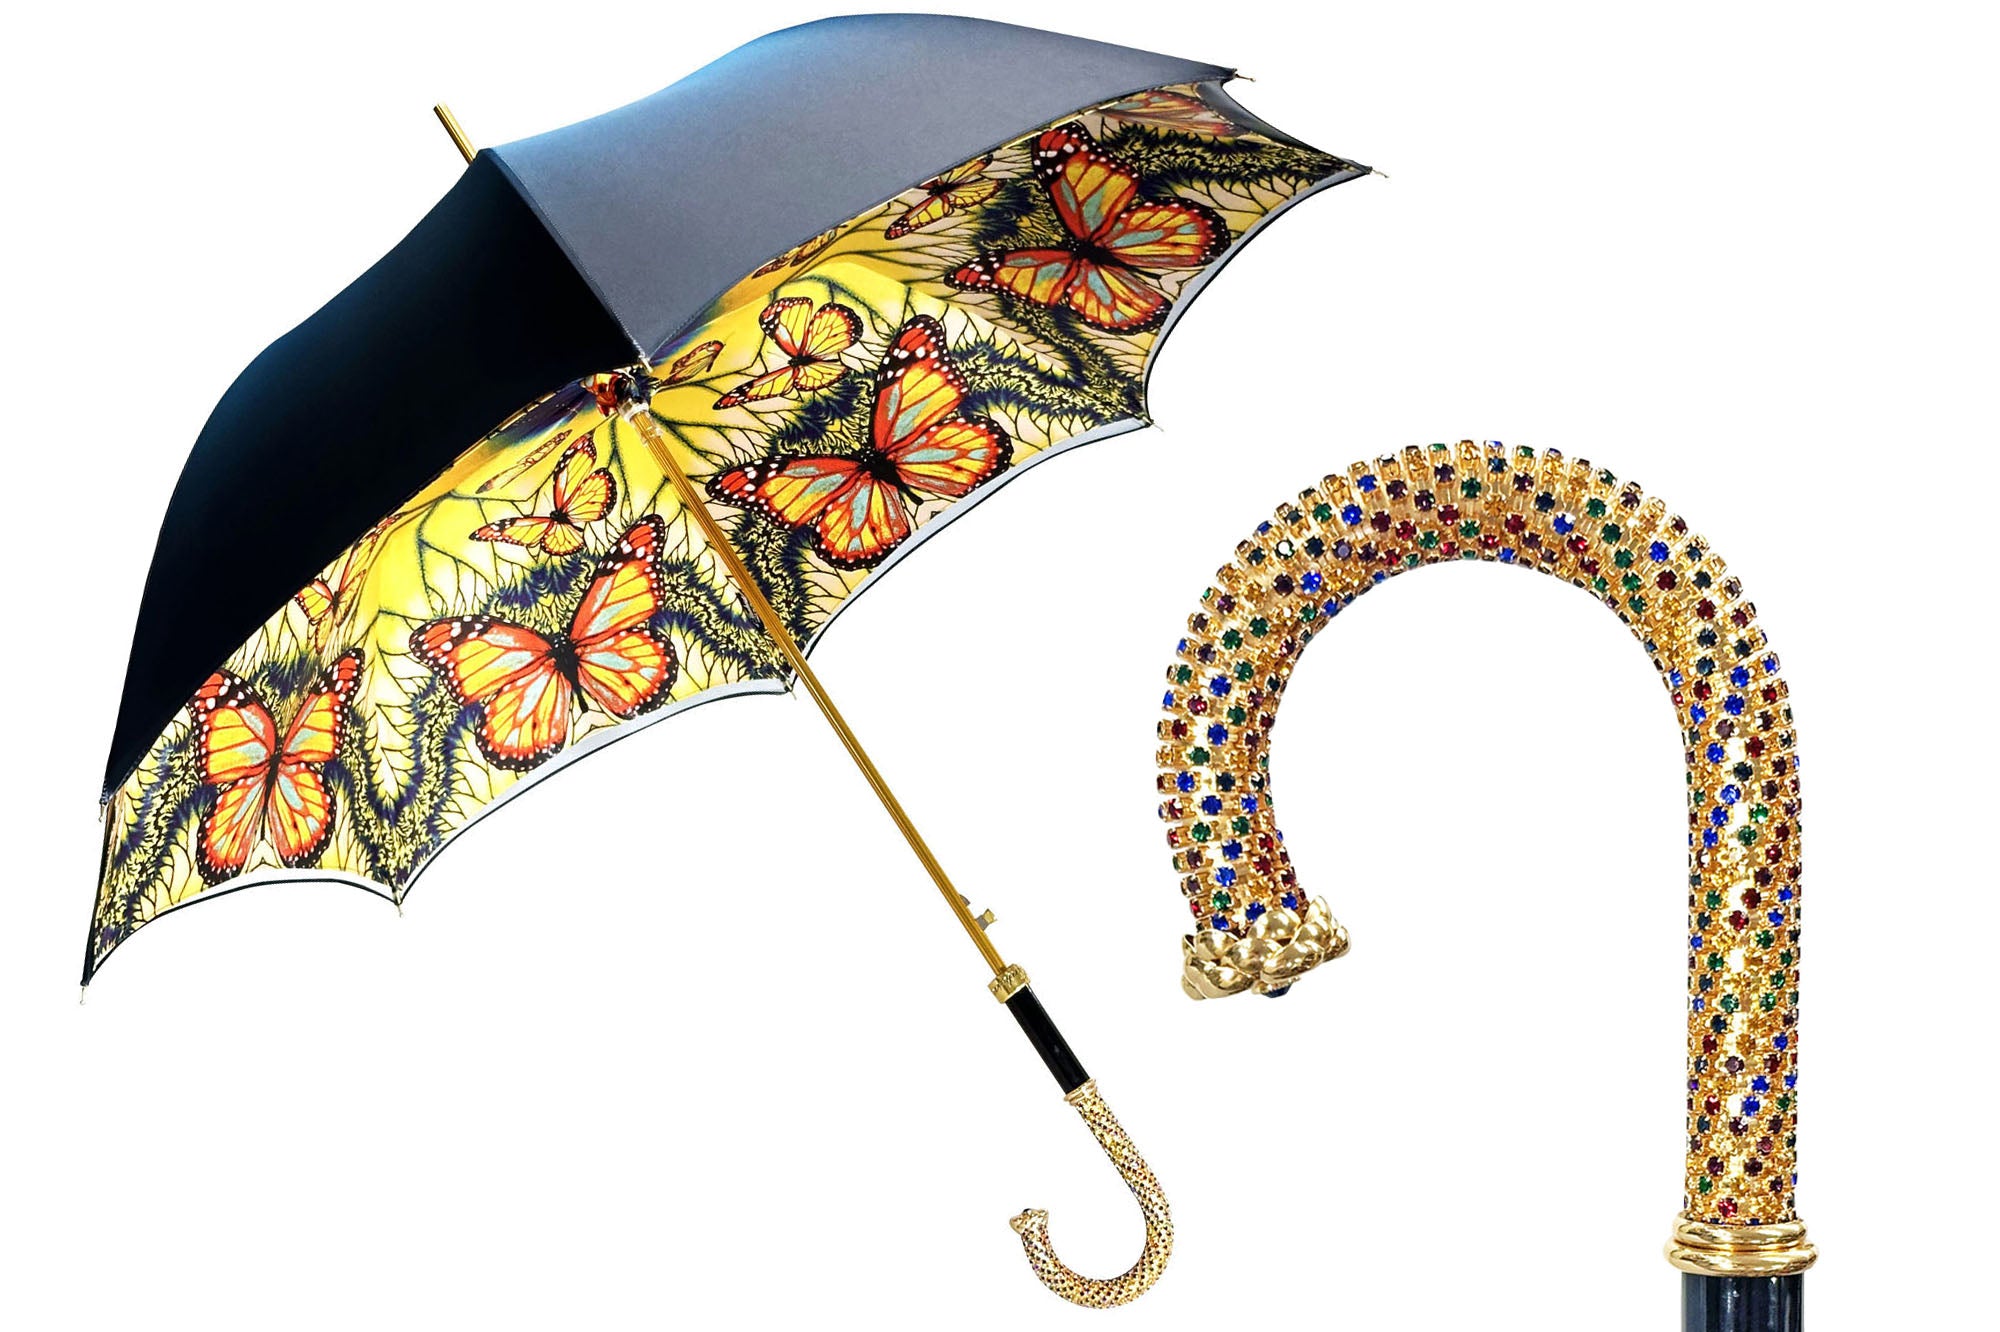 Bellissimo ombrello a doppio baldacchino con design a farfalla